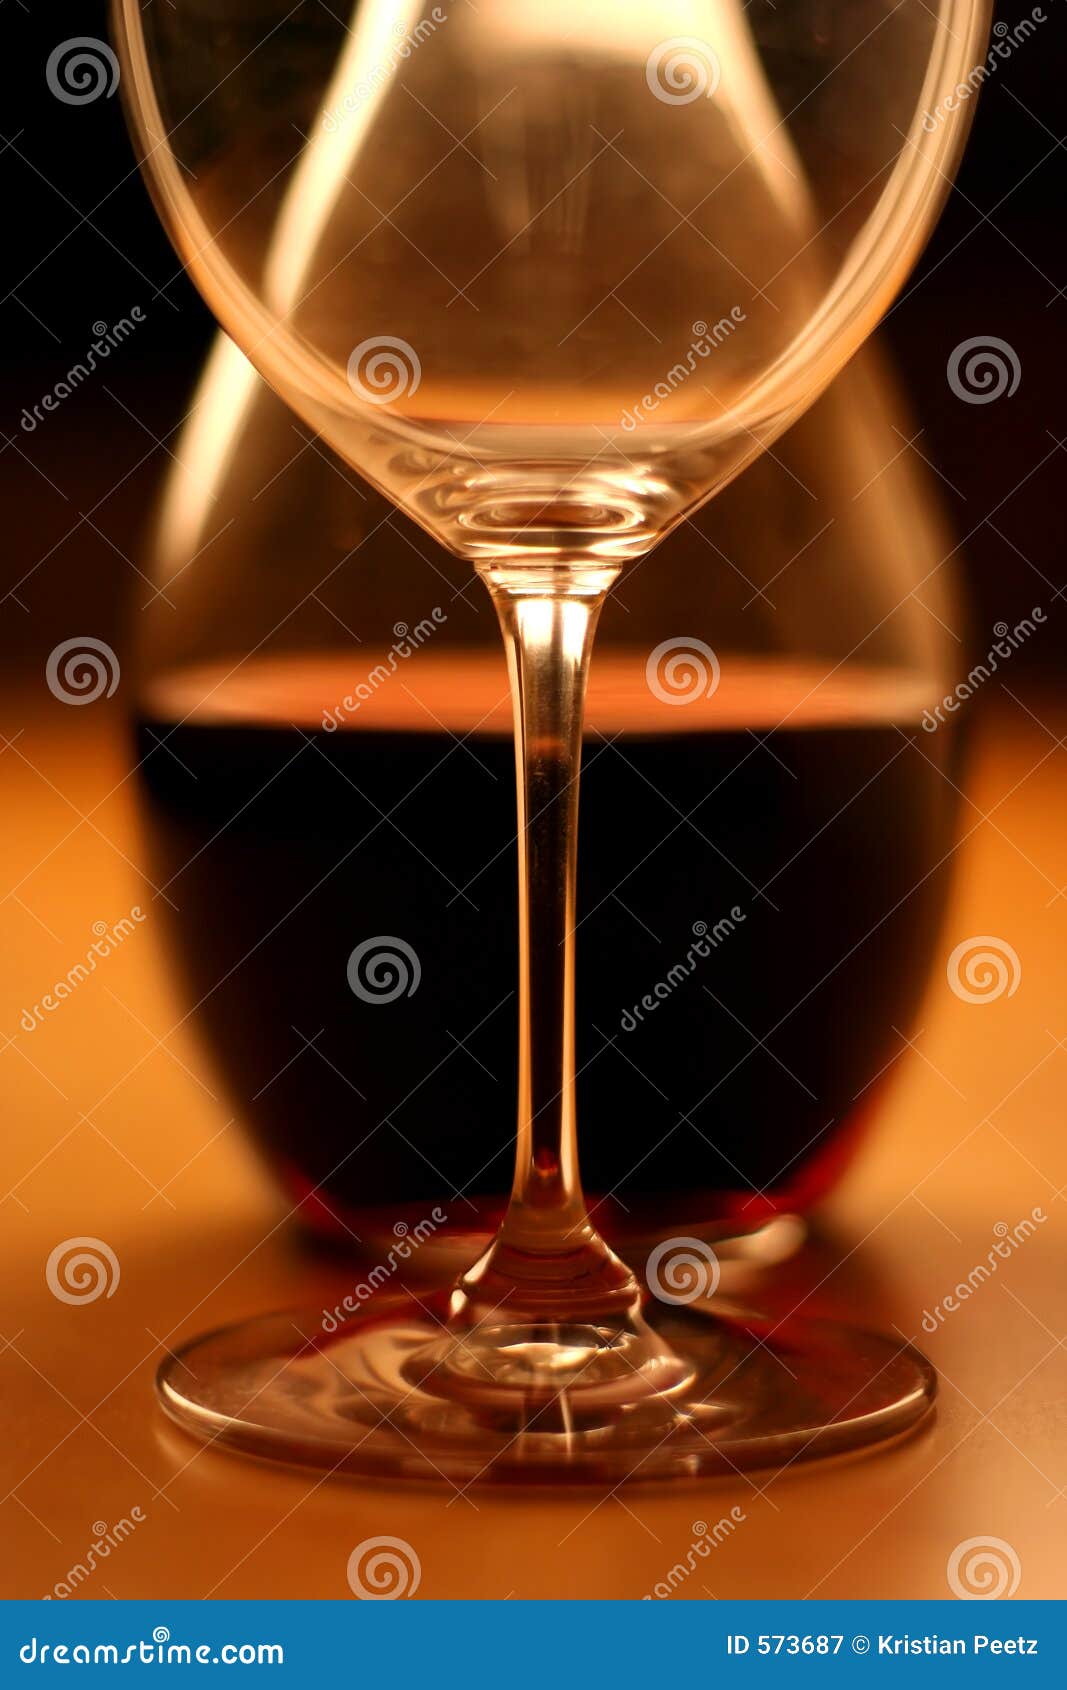 glas and wine (crop)